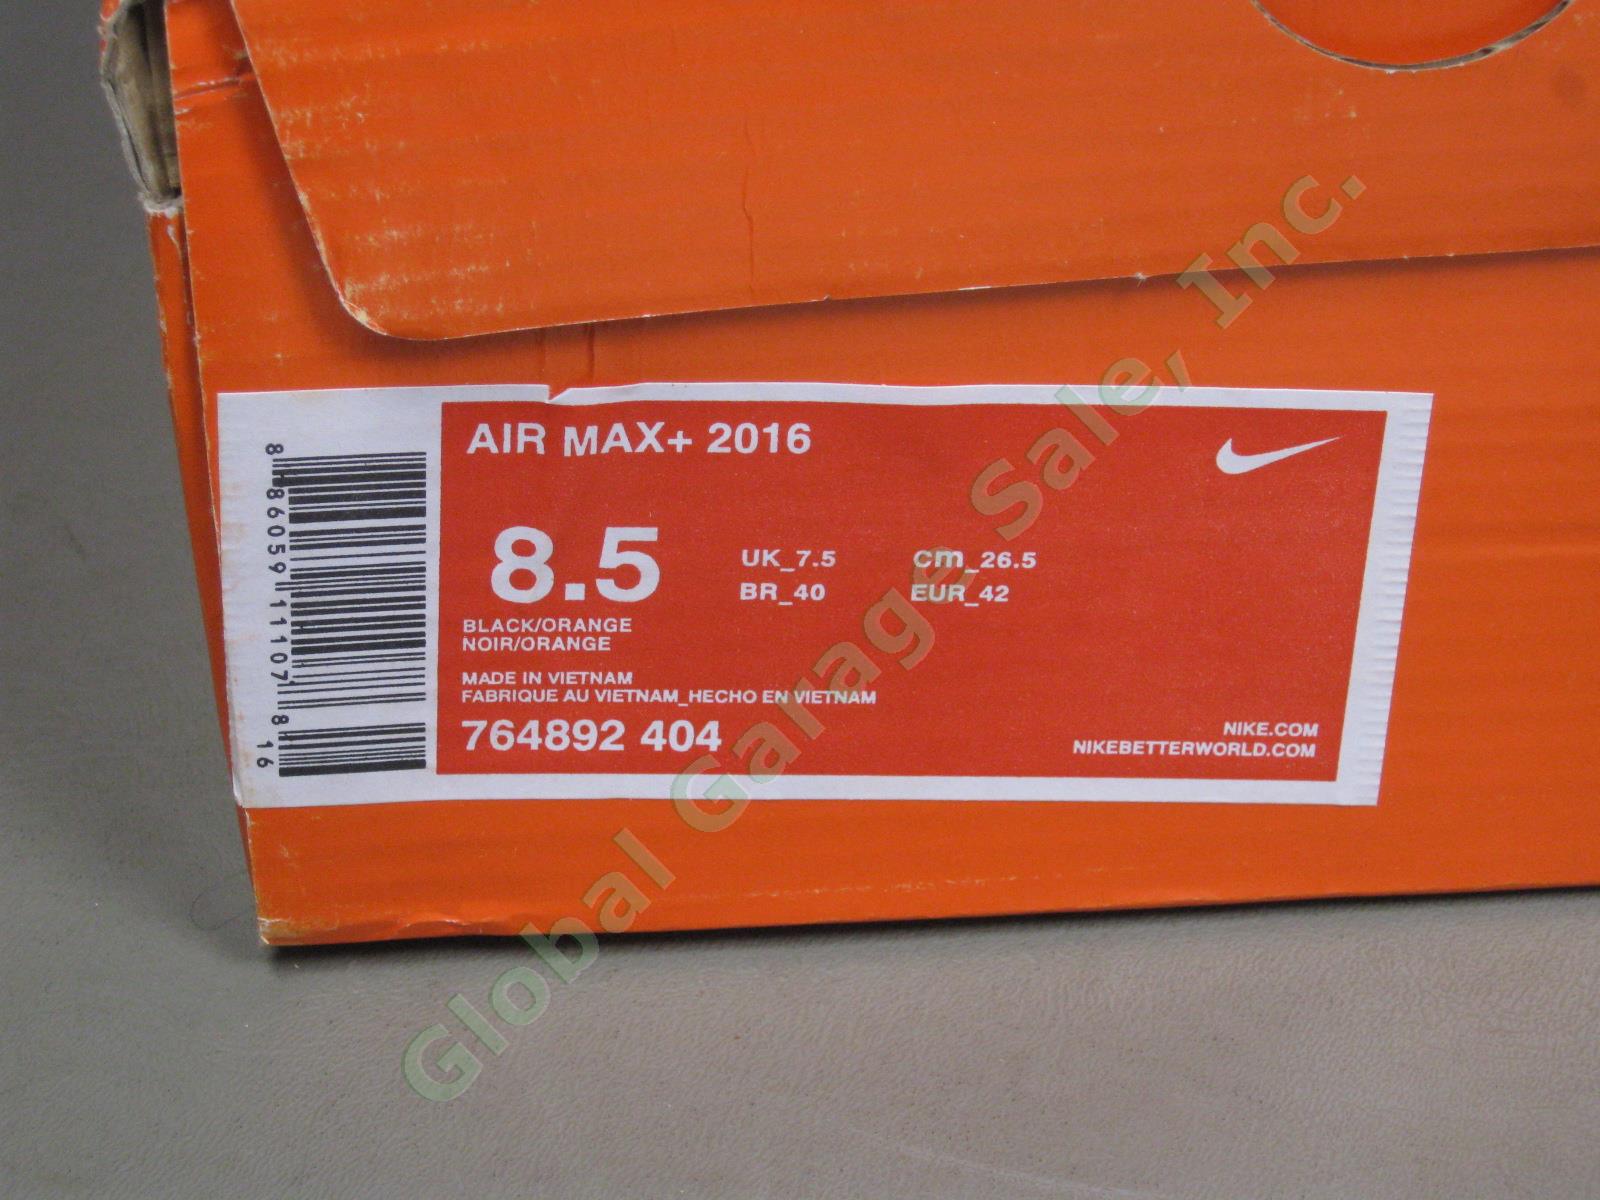 NEW Mens Nike AirMax 2016 Black/Orange Running Shoes Sneakers W/ Box 8.5 EUR 42 3